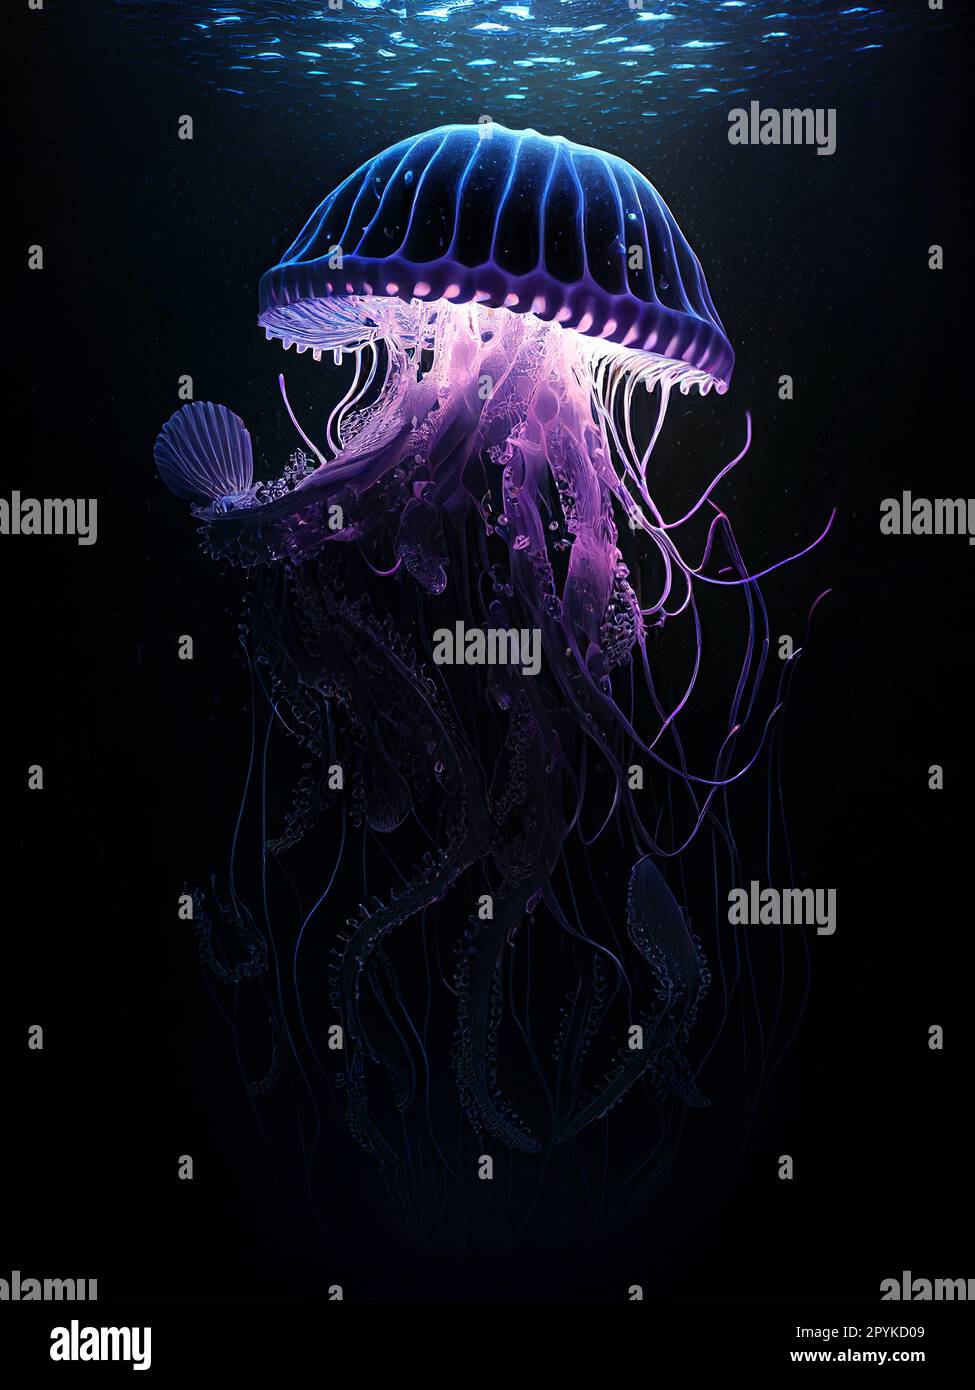 Purple and blue Jellyfish dansing in the dark blue ocean under water,potrait jellyfish under water in the sea beautiful wildlife illustration Stock Photo